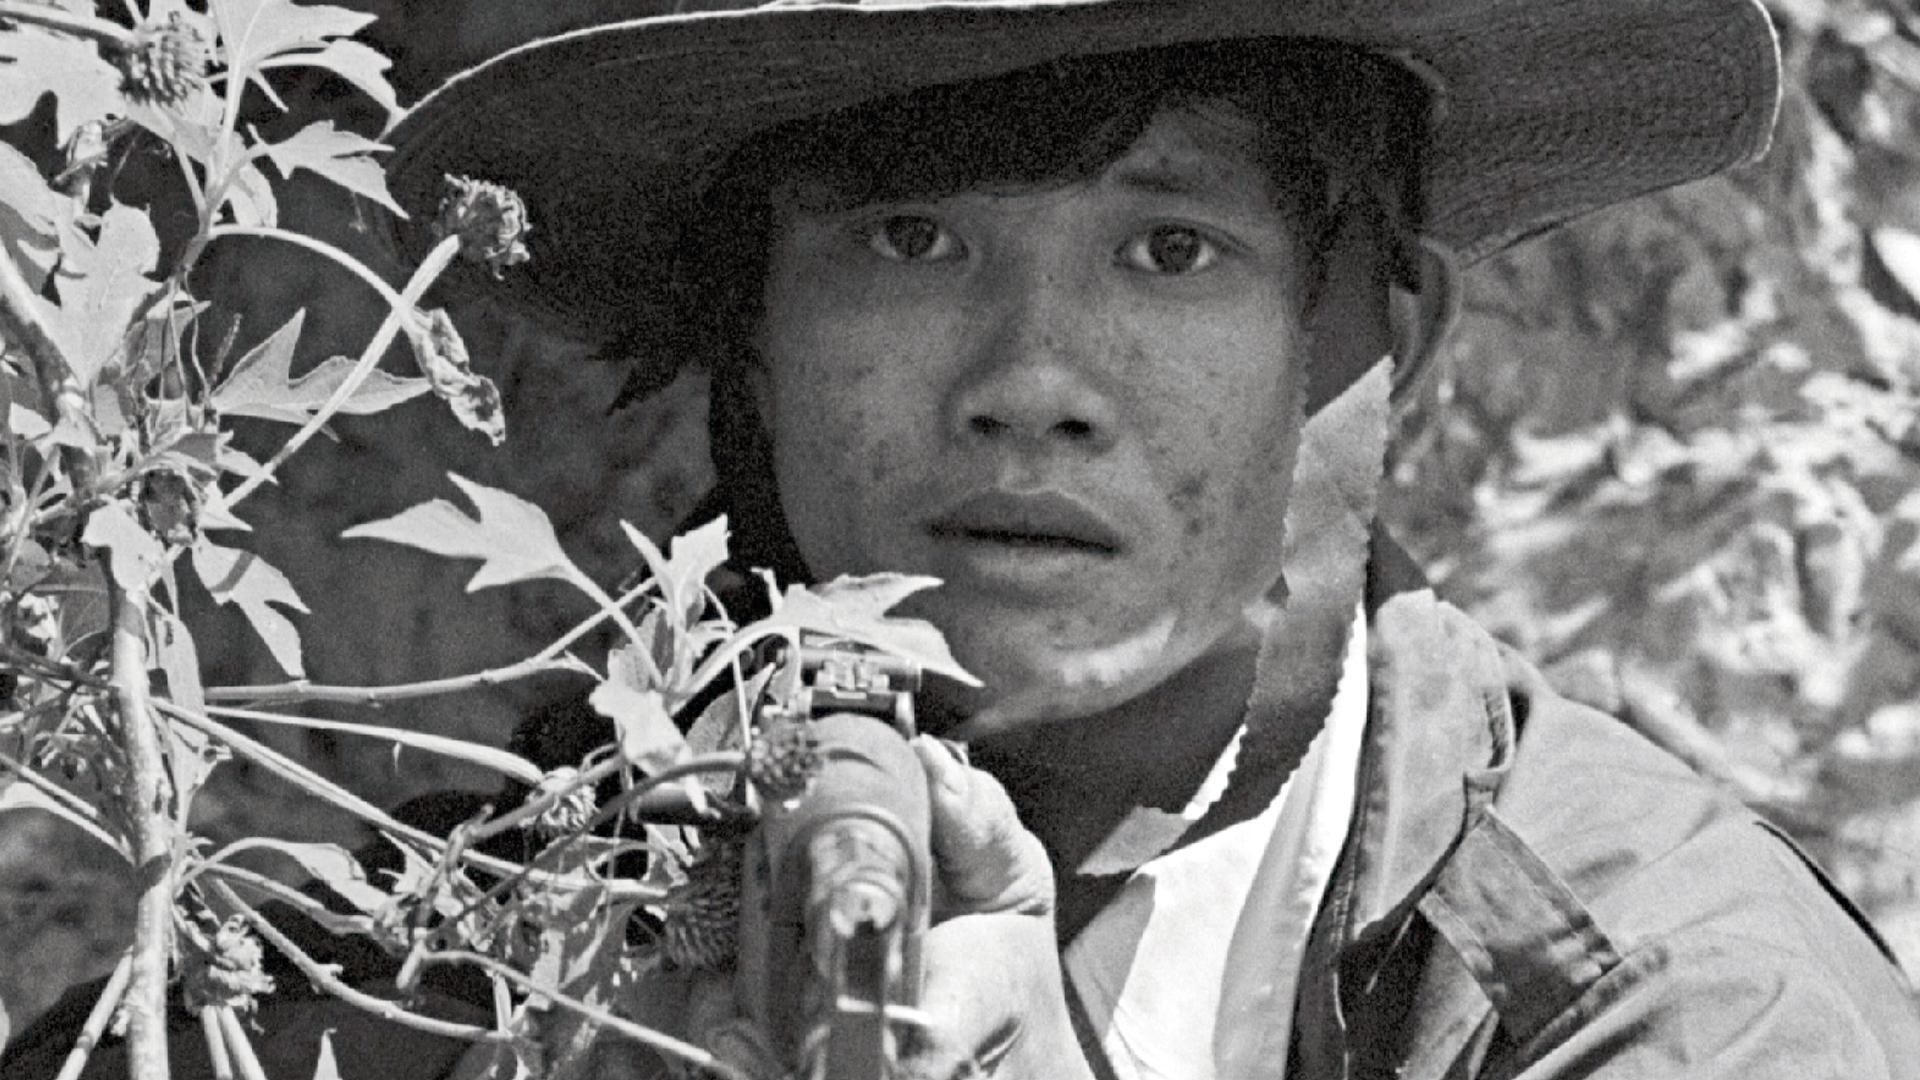 La mirada vietnamita: 3 libros sobre "la otra" Guerra de Vietnam